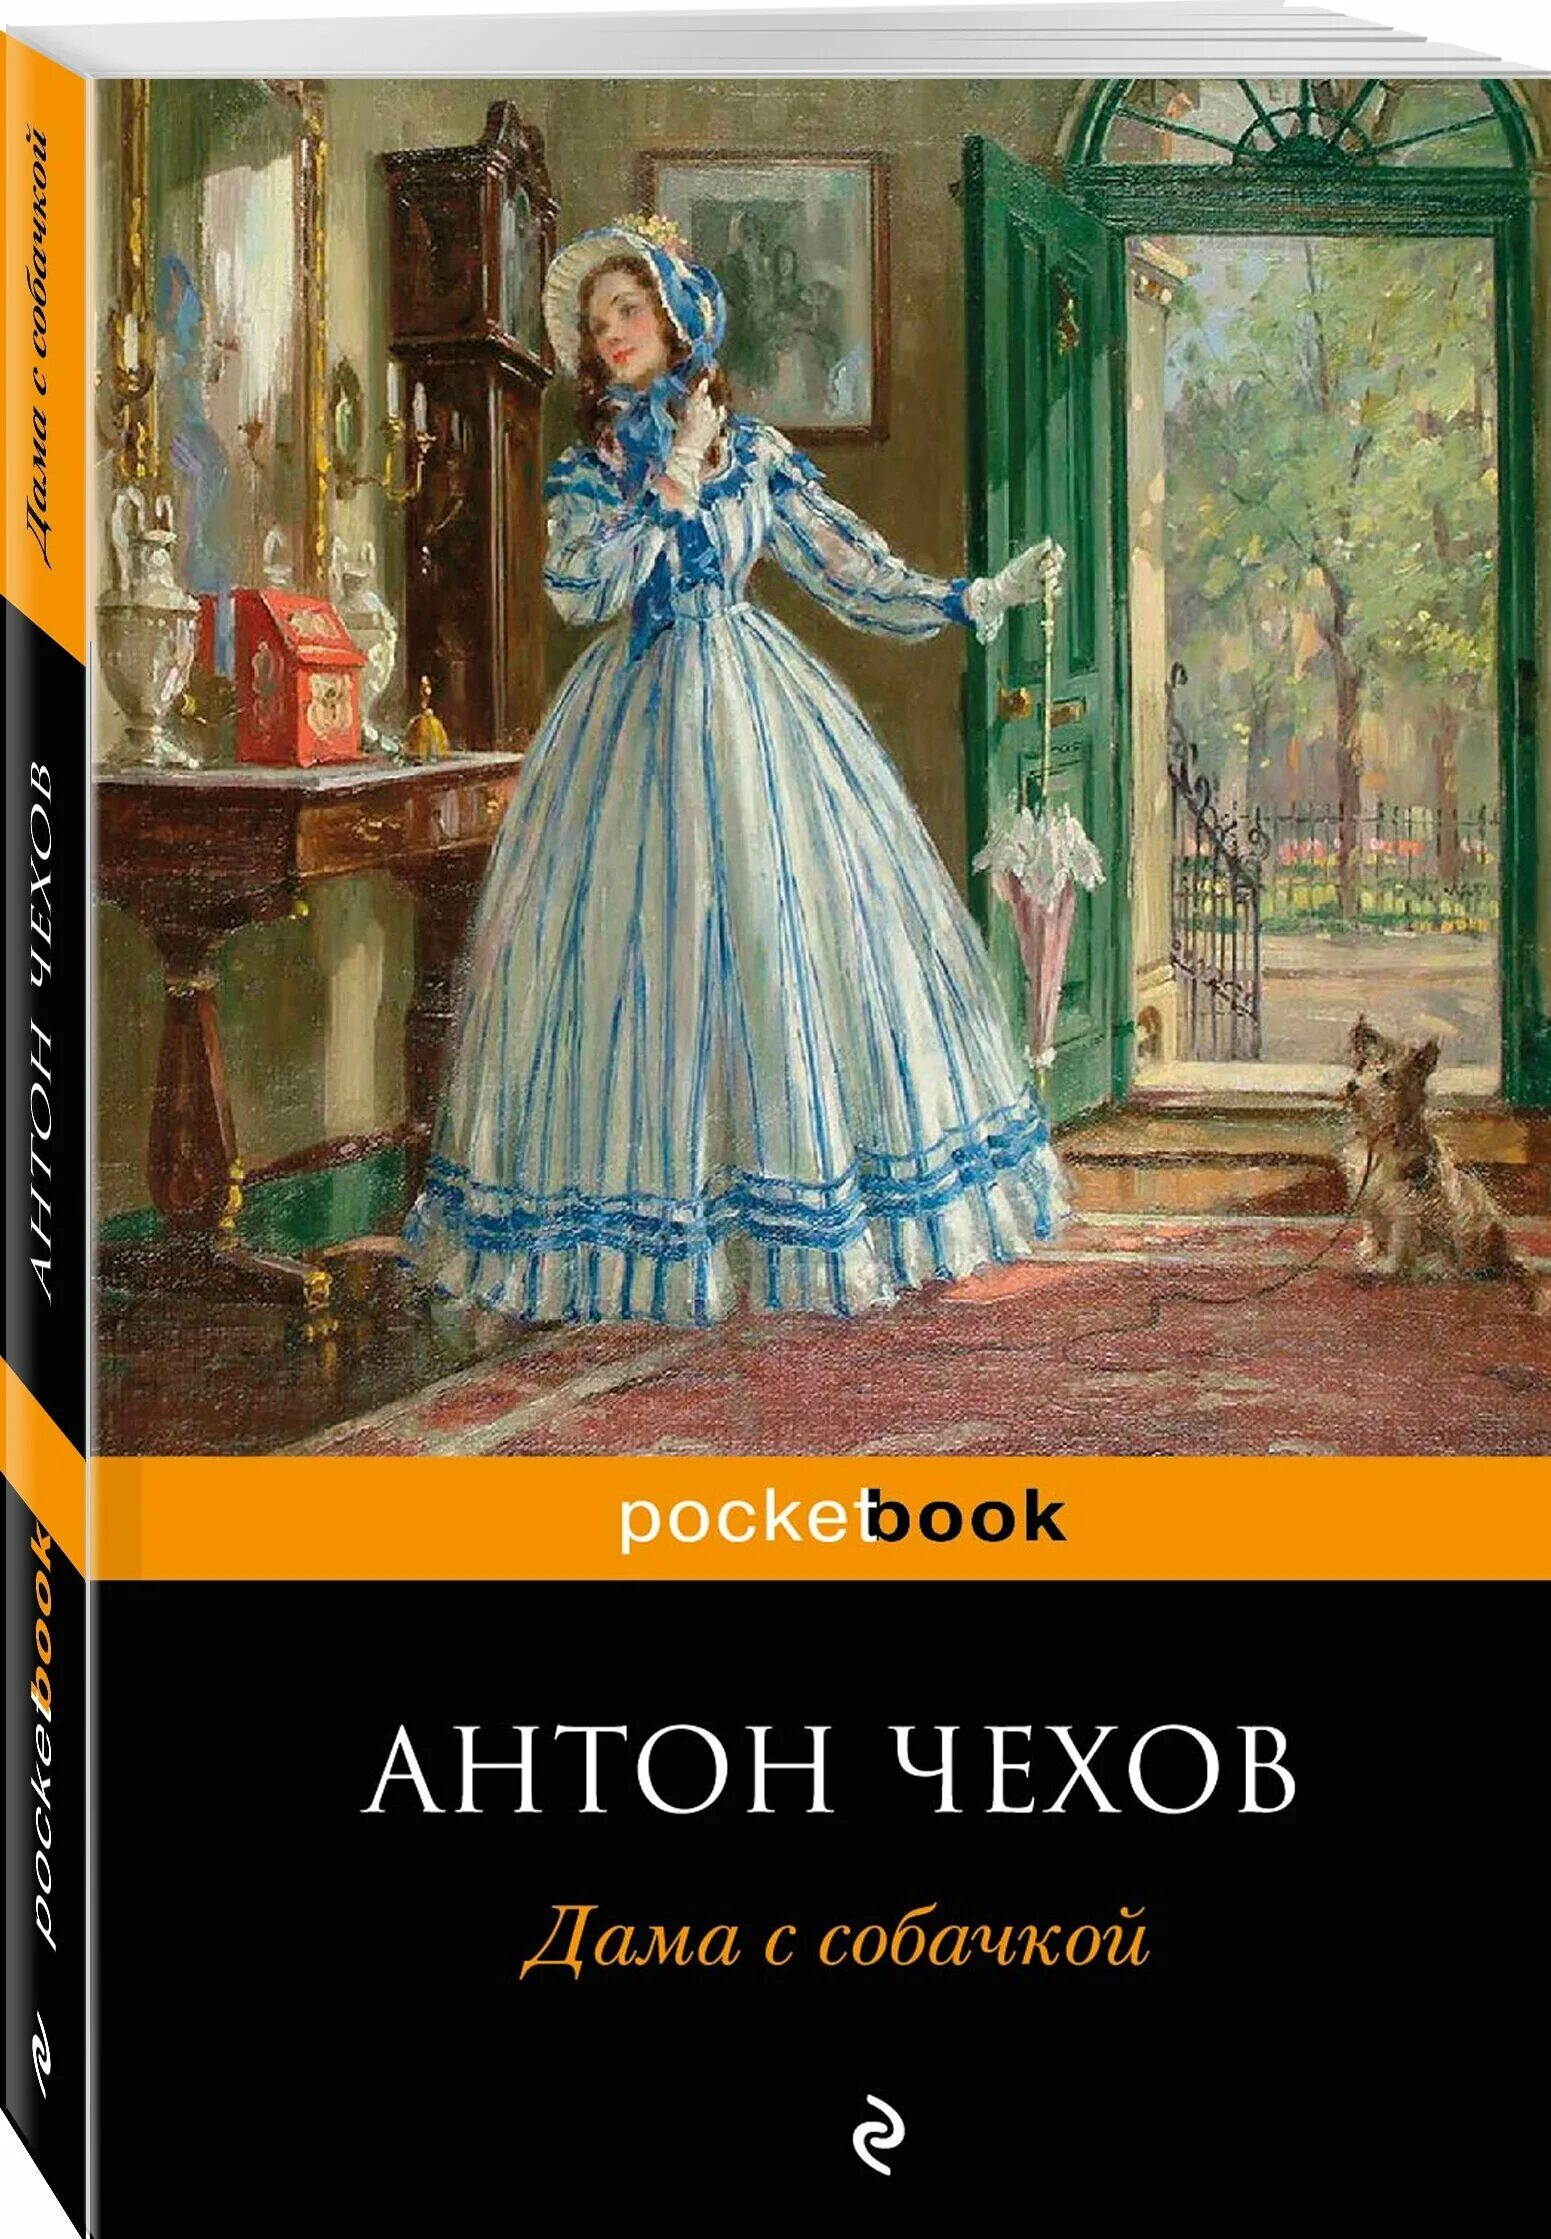 А п чехов дама. Чехов дама с собачкой обложка книги.